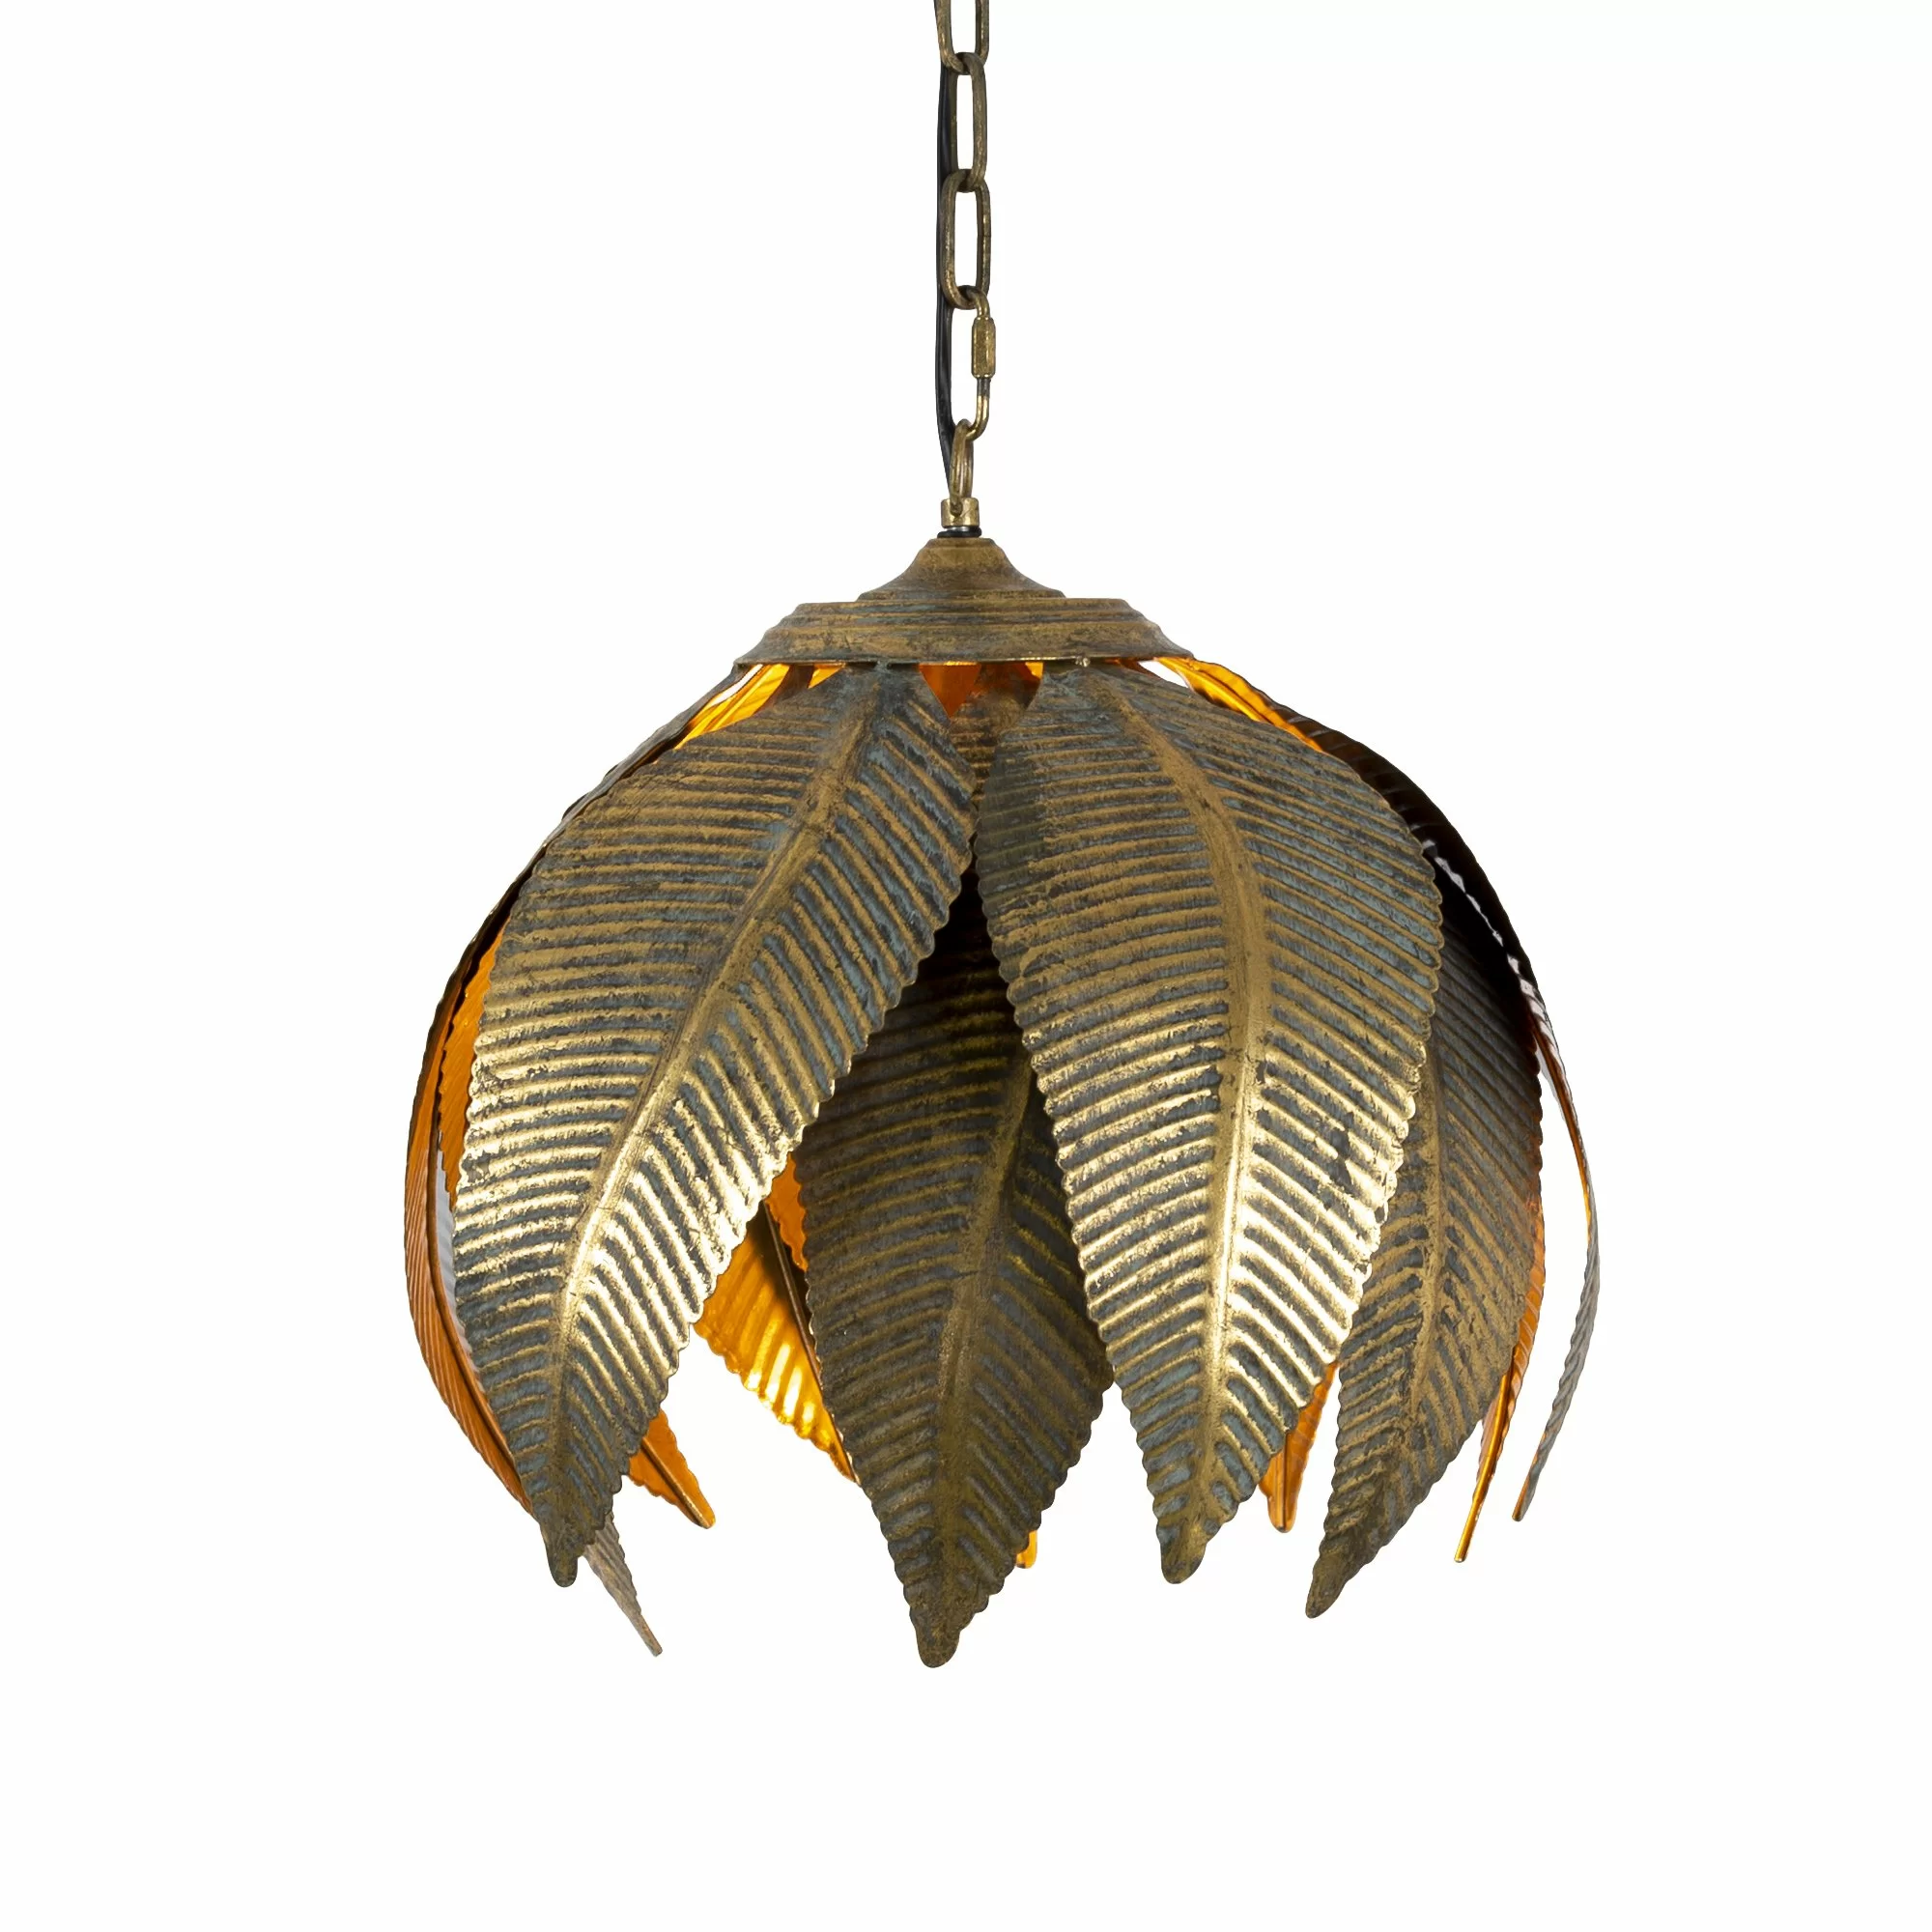 Hanglamp retro design palmbladeren goud kleurig